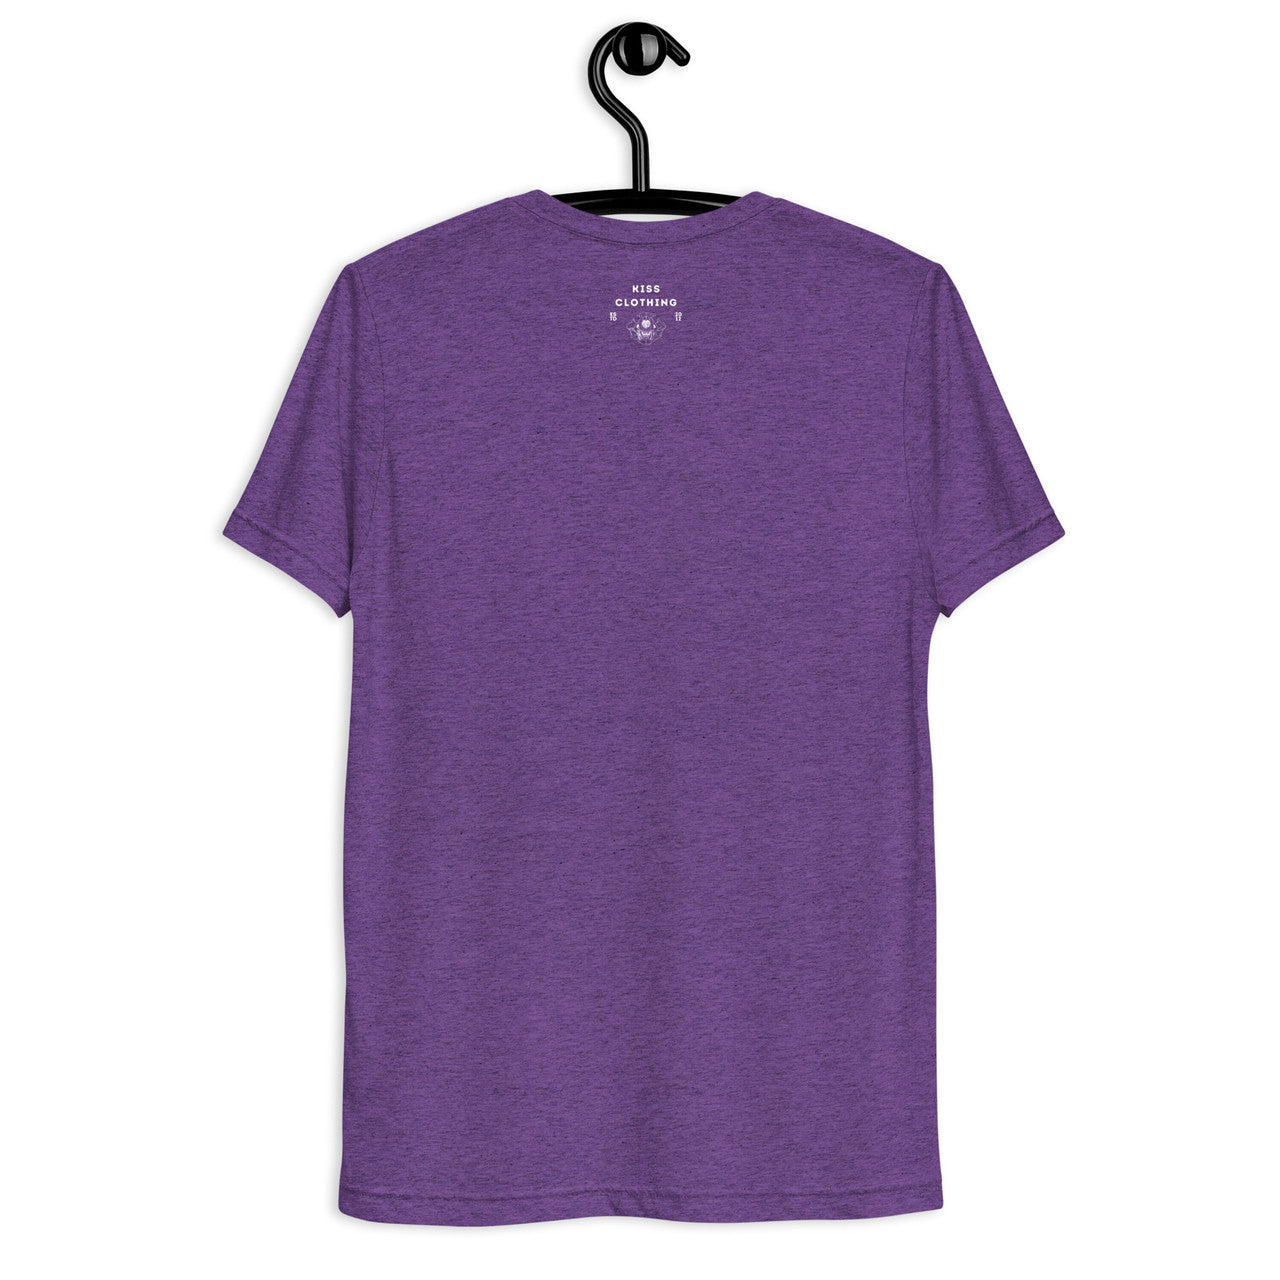 Planet KiSS Short sleeve t-shirt - Chandler Bing Inspired 90s